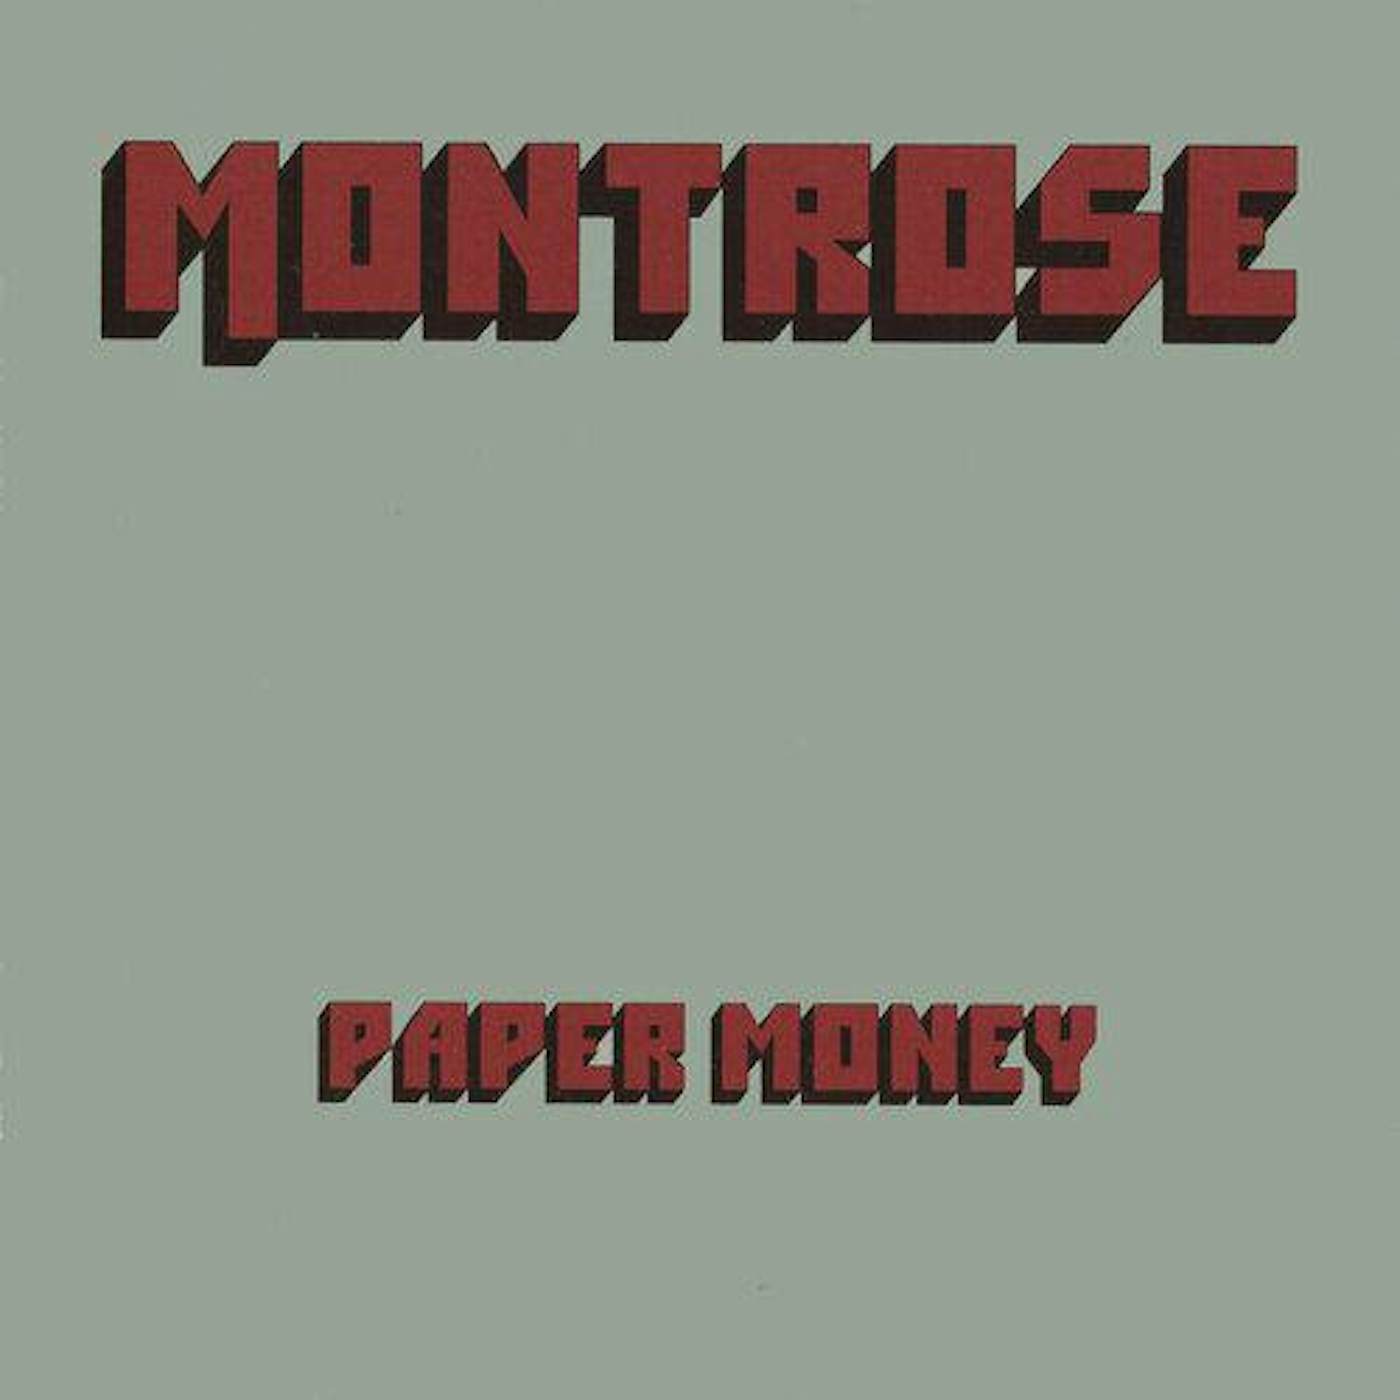 Montrose Paper Money (translucent green vinyl/limited edition)